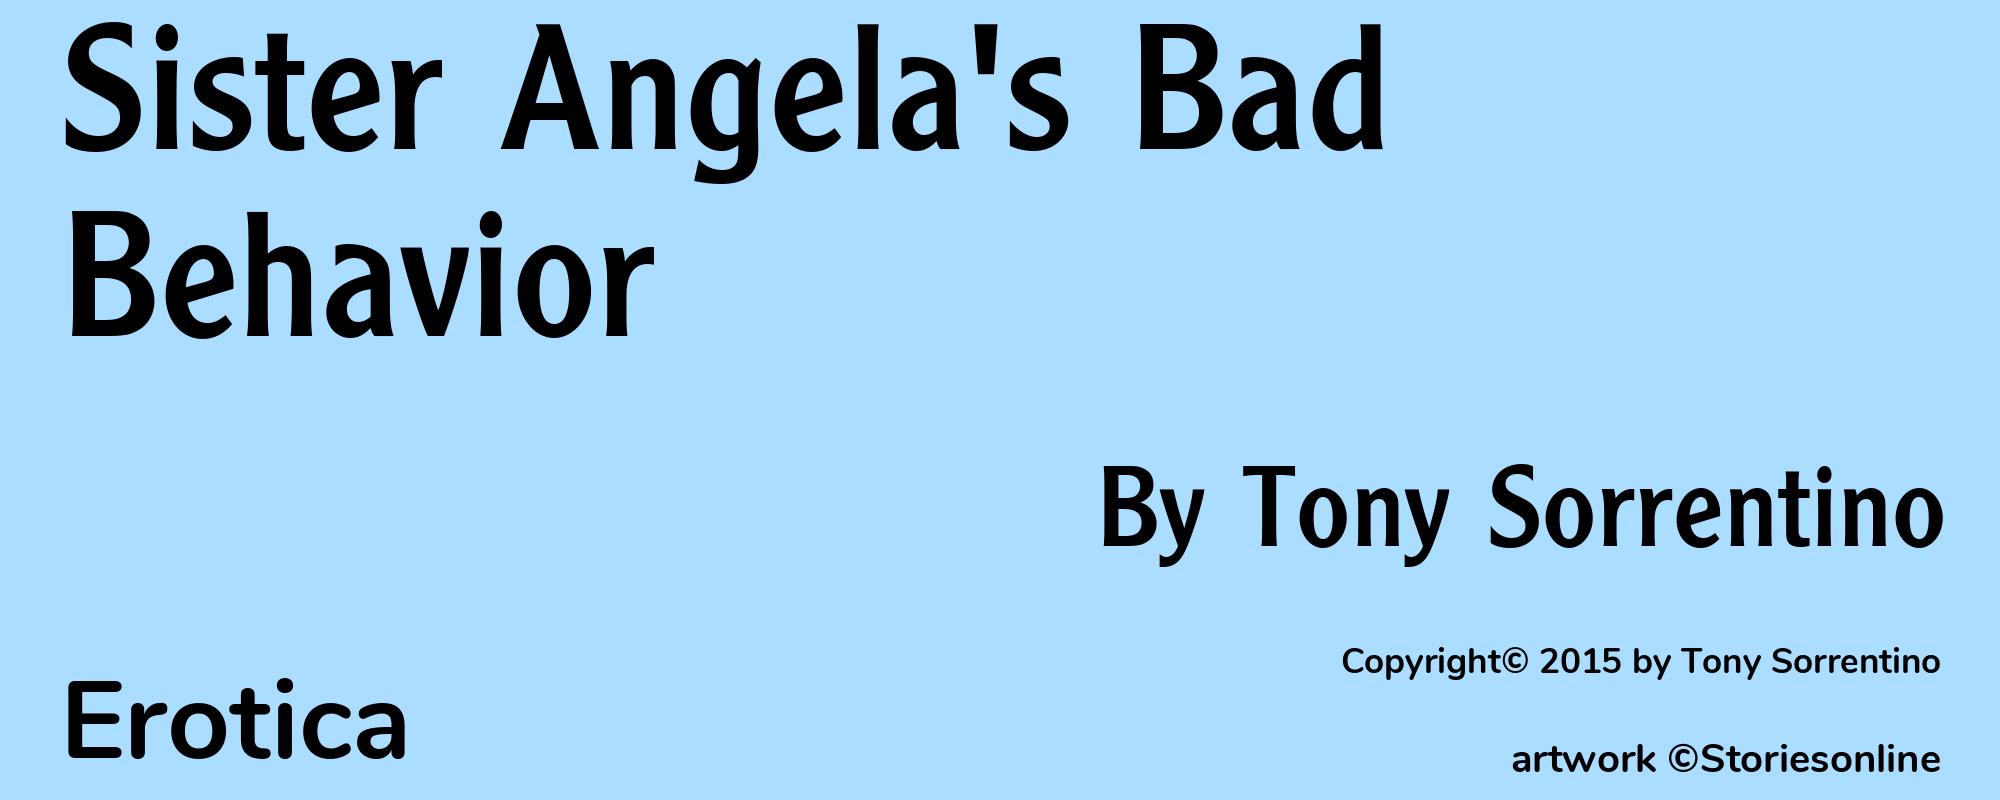 Sister Angela's Bad Behavior - Cover